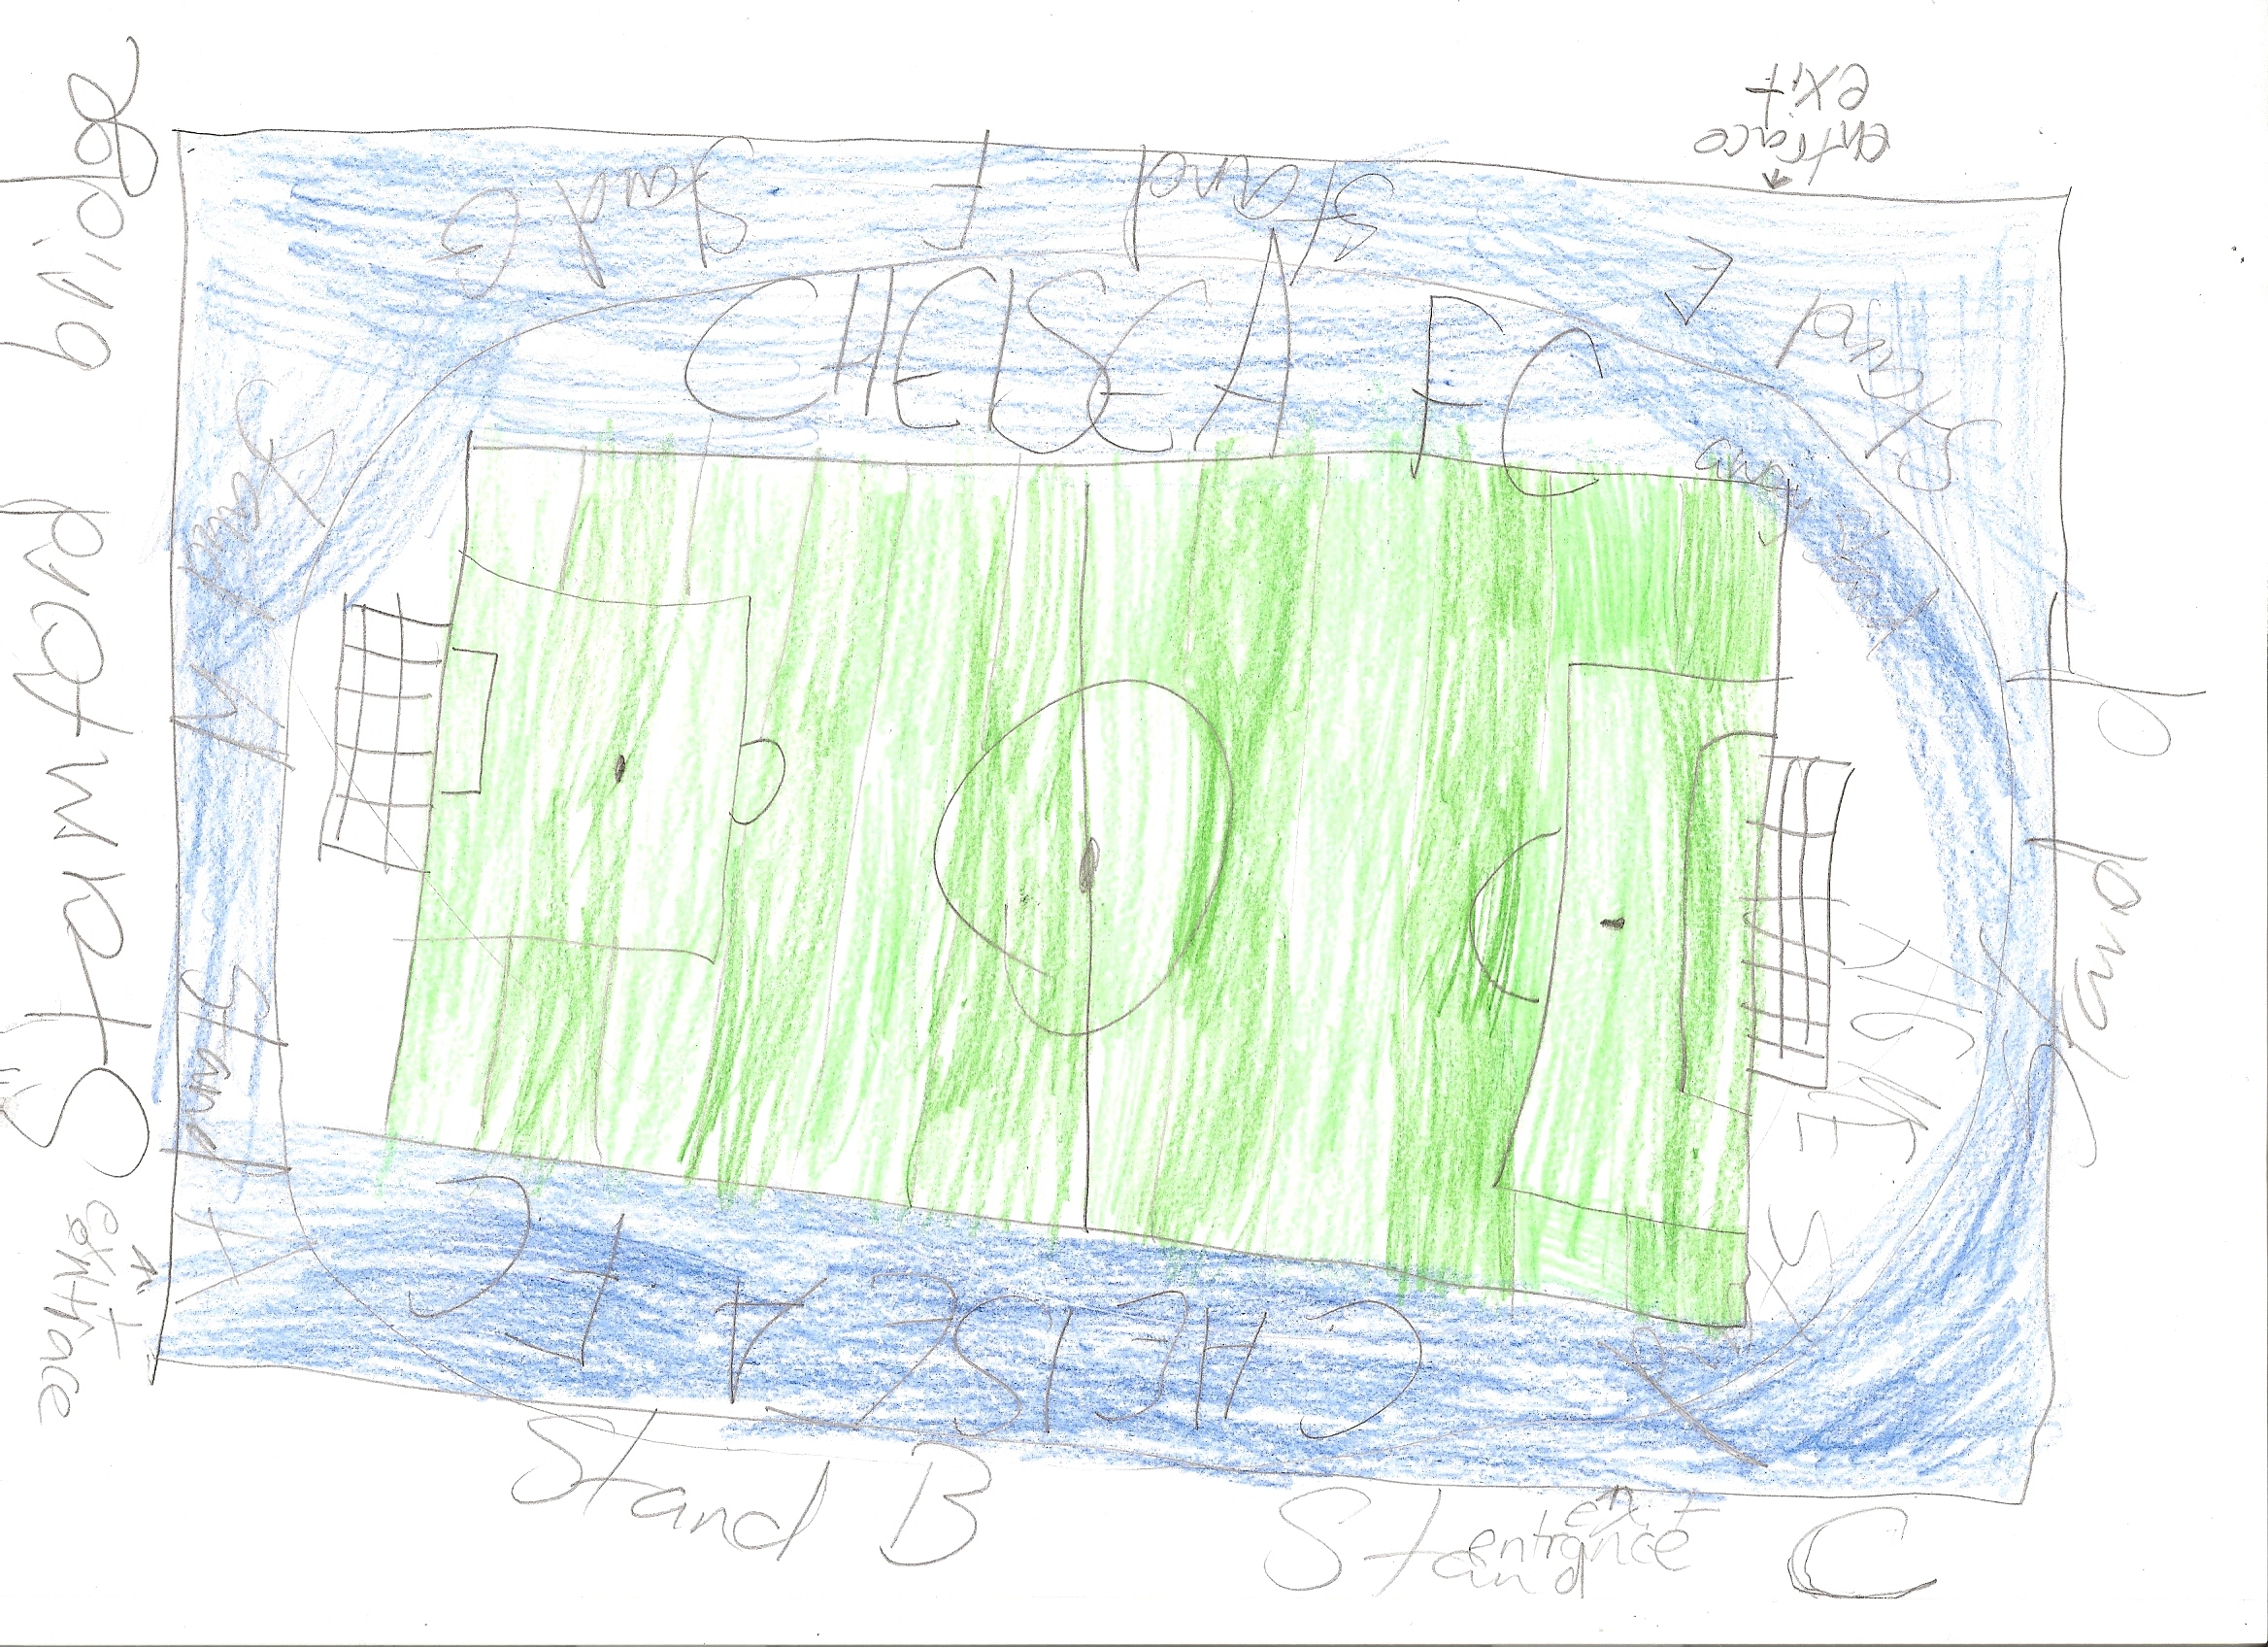 Football Stadium Drawing Stock Photos - 16,418 Images | Shutterstock